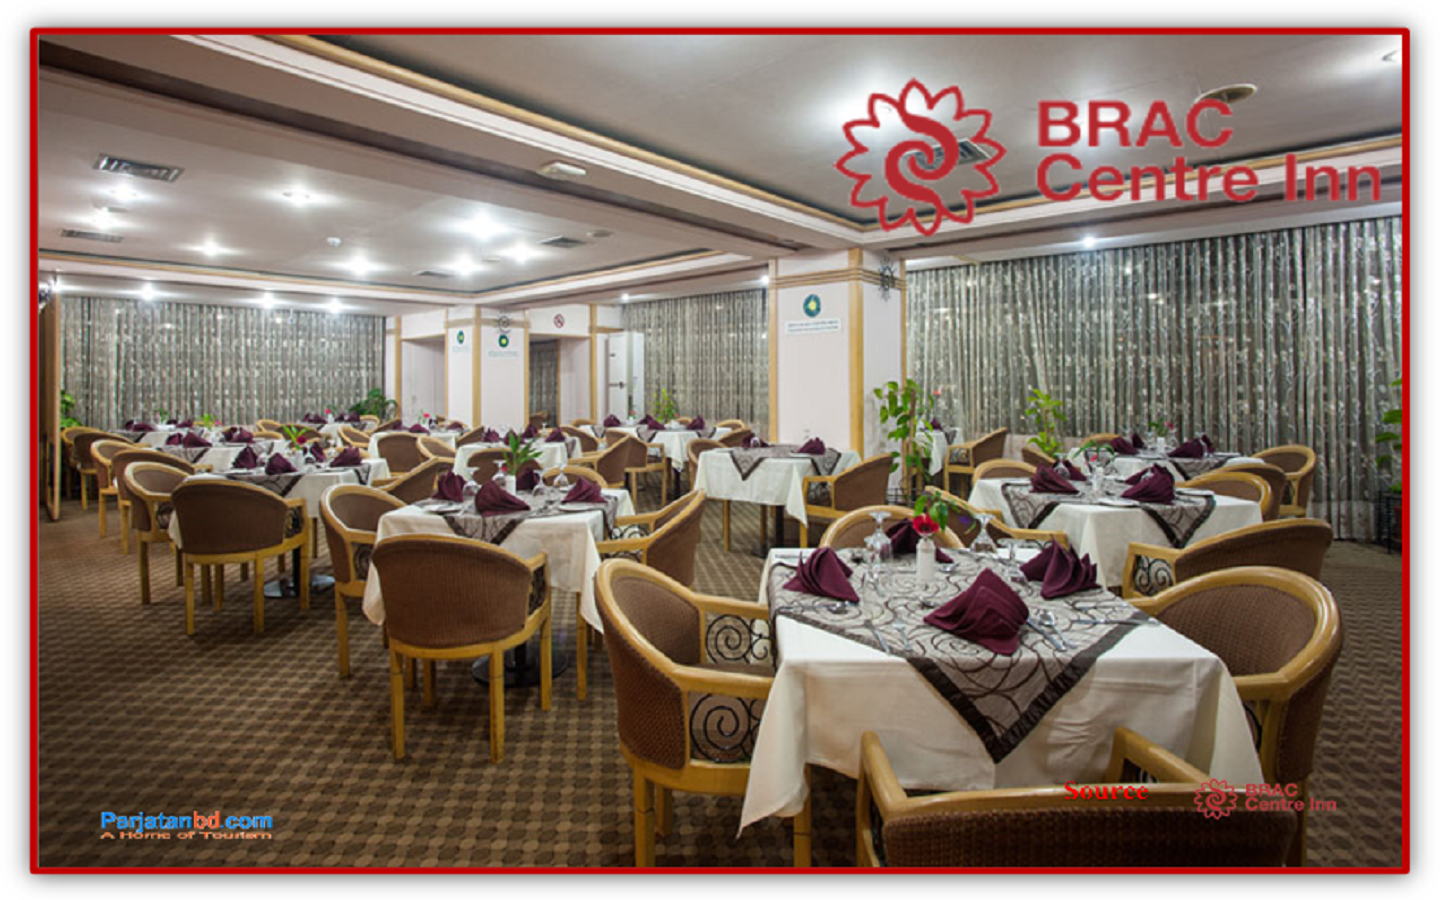 BRAC Centre Inn, Mohakhali Picture-1